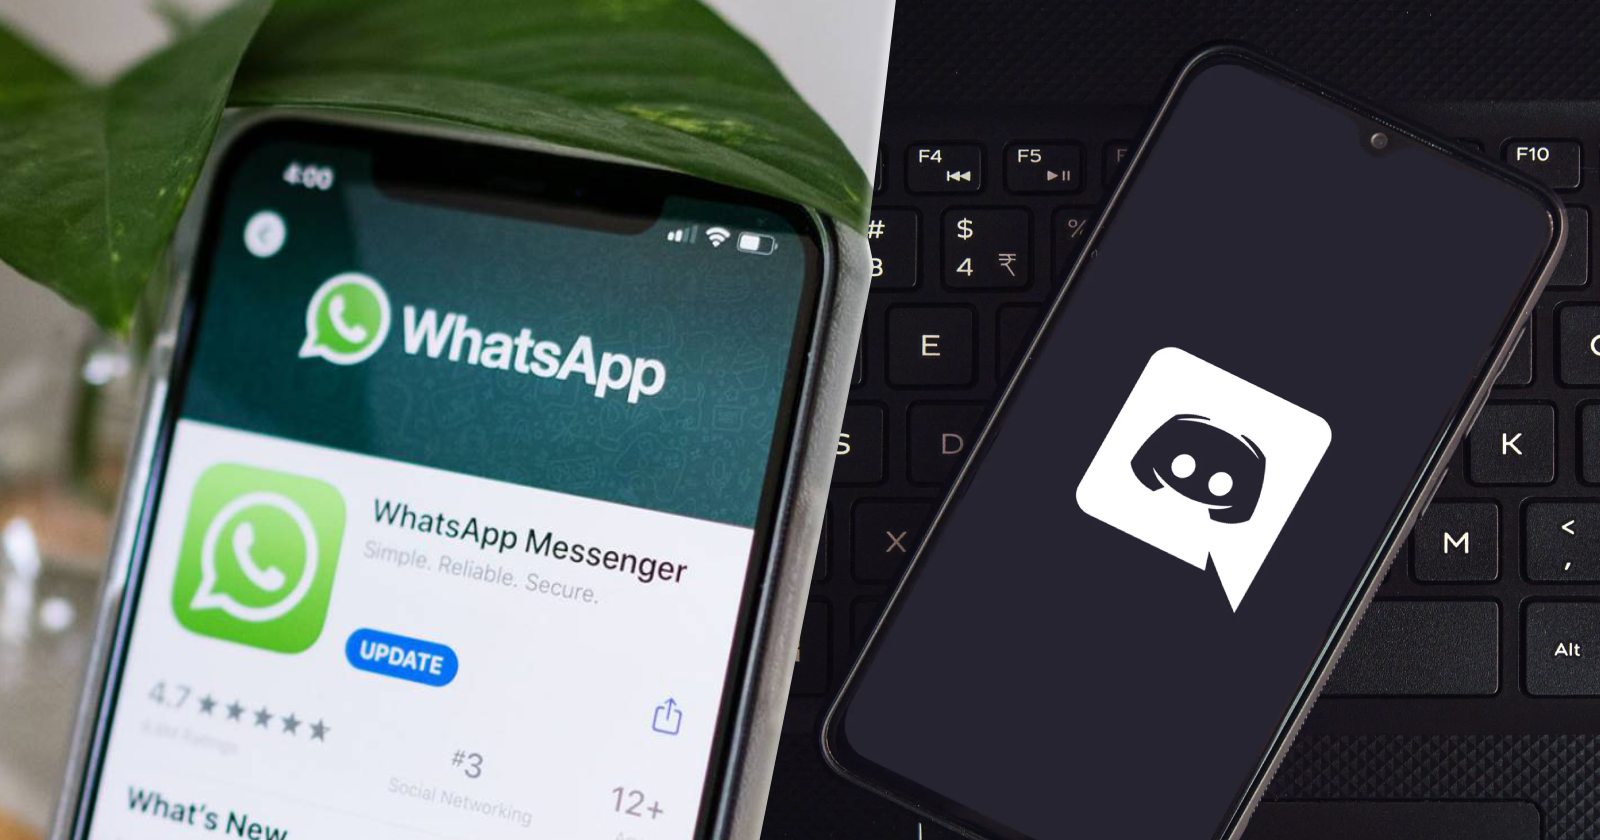 Whatsapp sesli ekran paylaşma özelliği, whatsapp özelliği, whatsapp ekran paylaşma özelliği, whatsapp ekran paylaşma